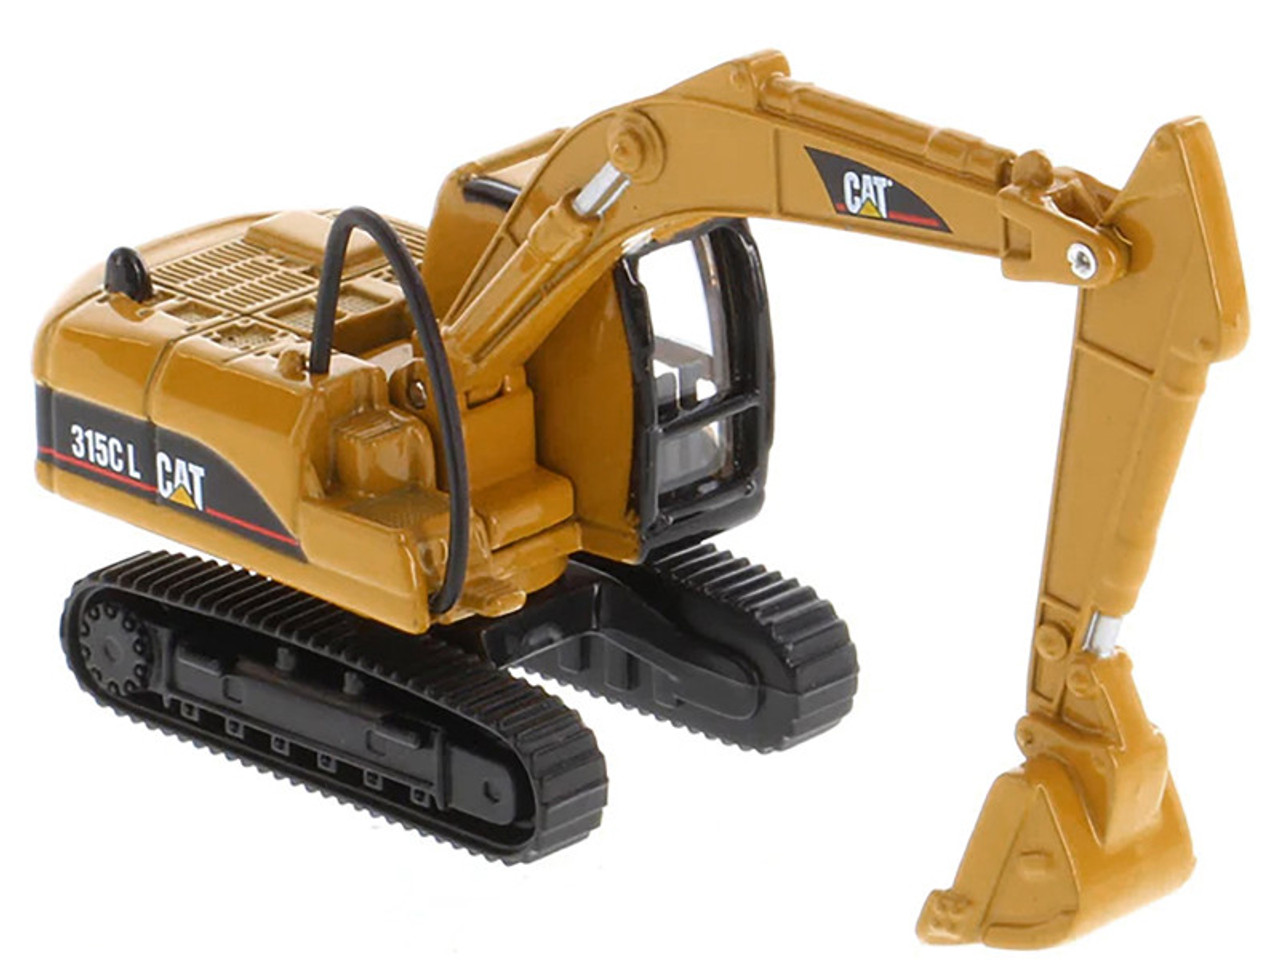 CAT Caterpillar 315C L Hydraulic Excavator Yellow 1/87 (HO) Diecast Model by Diecast Masters